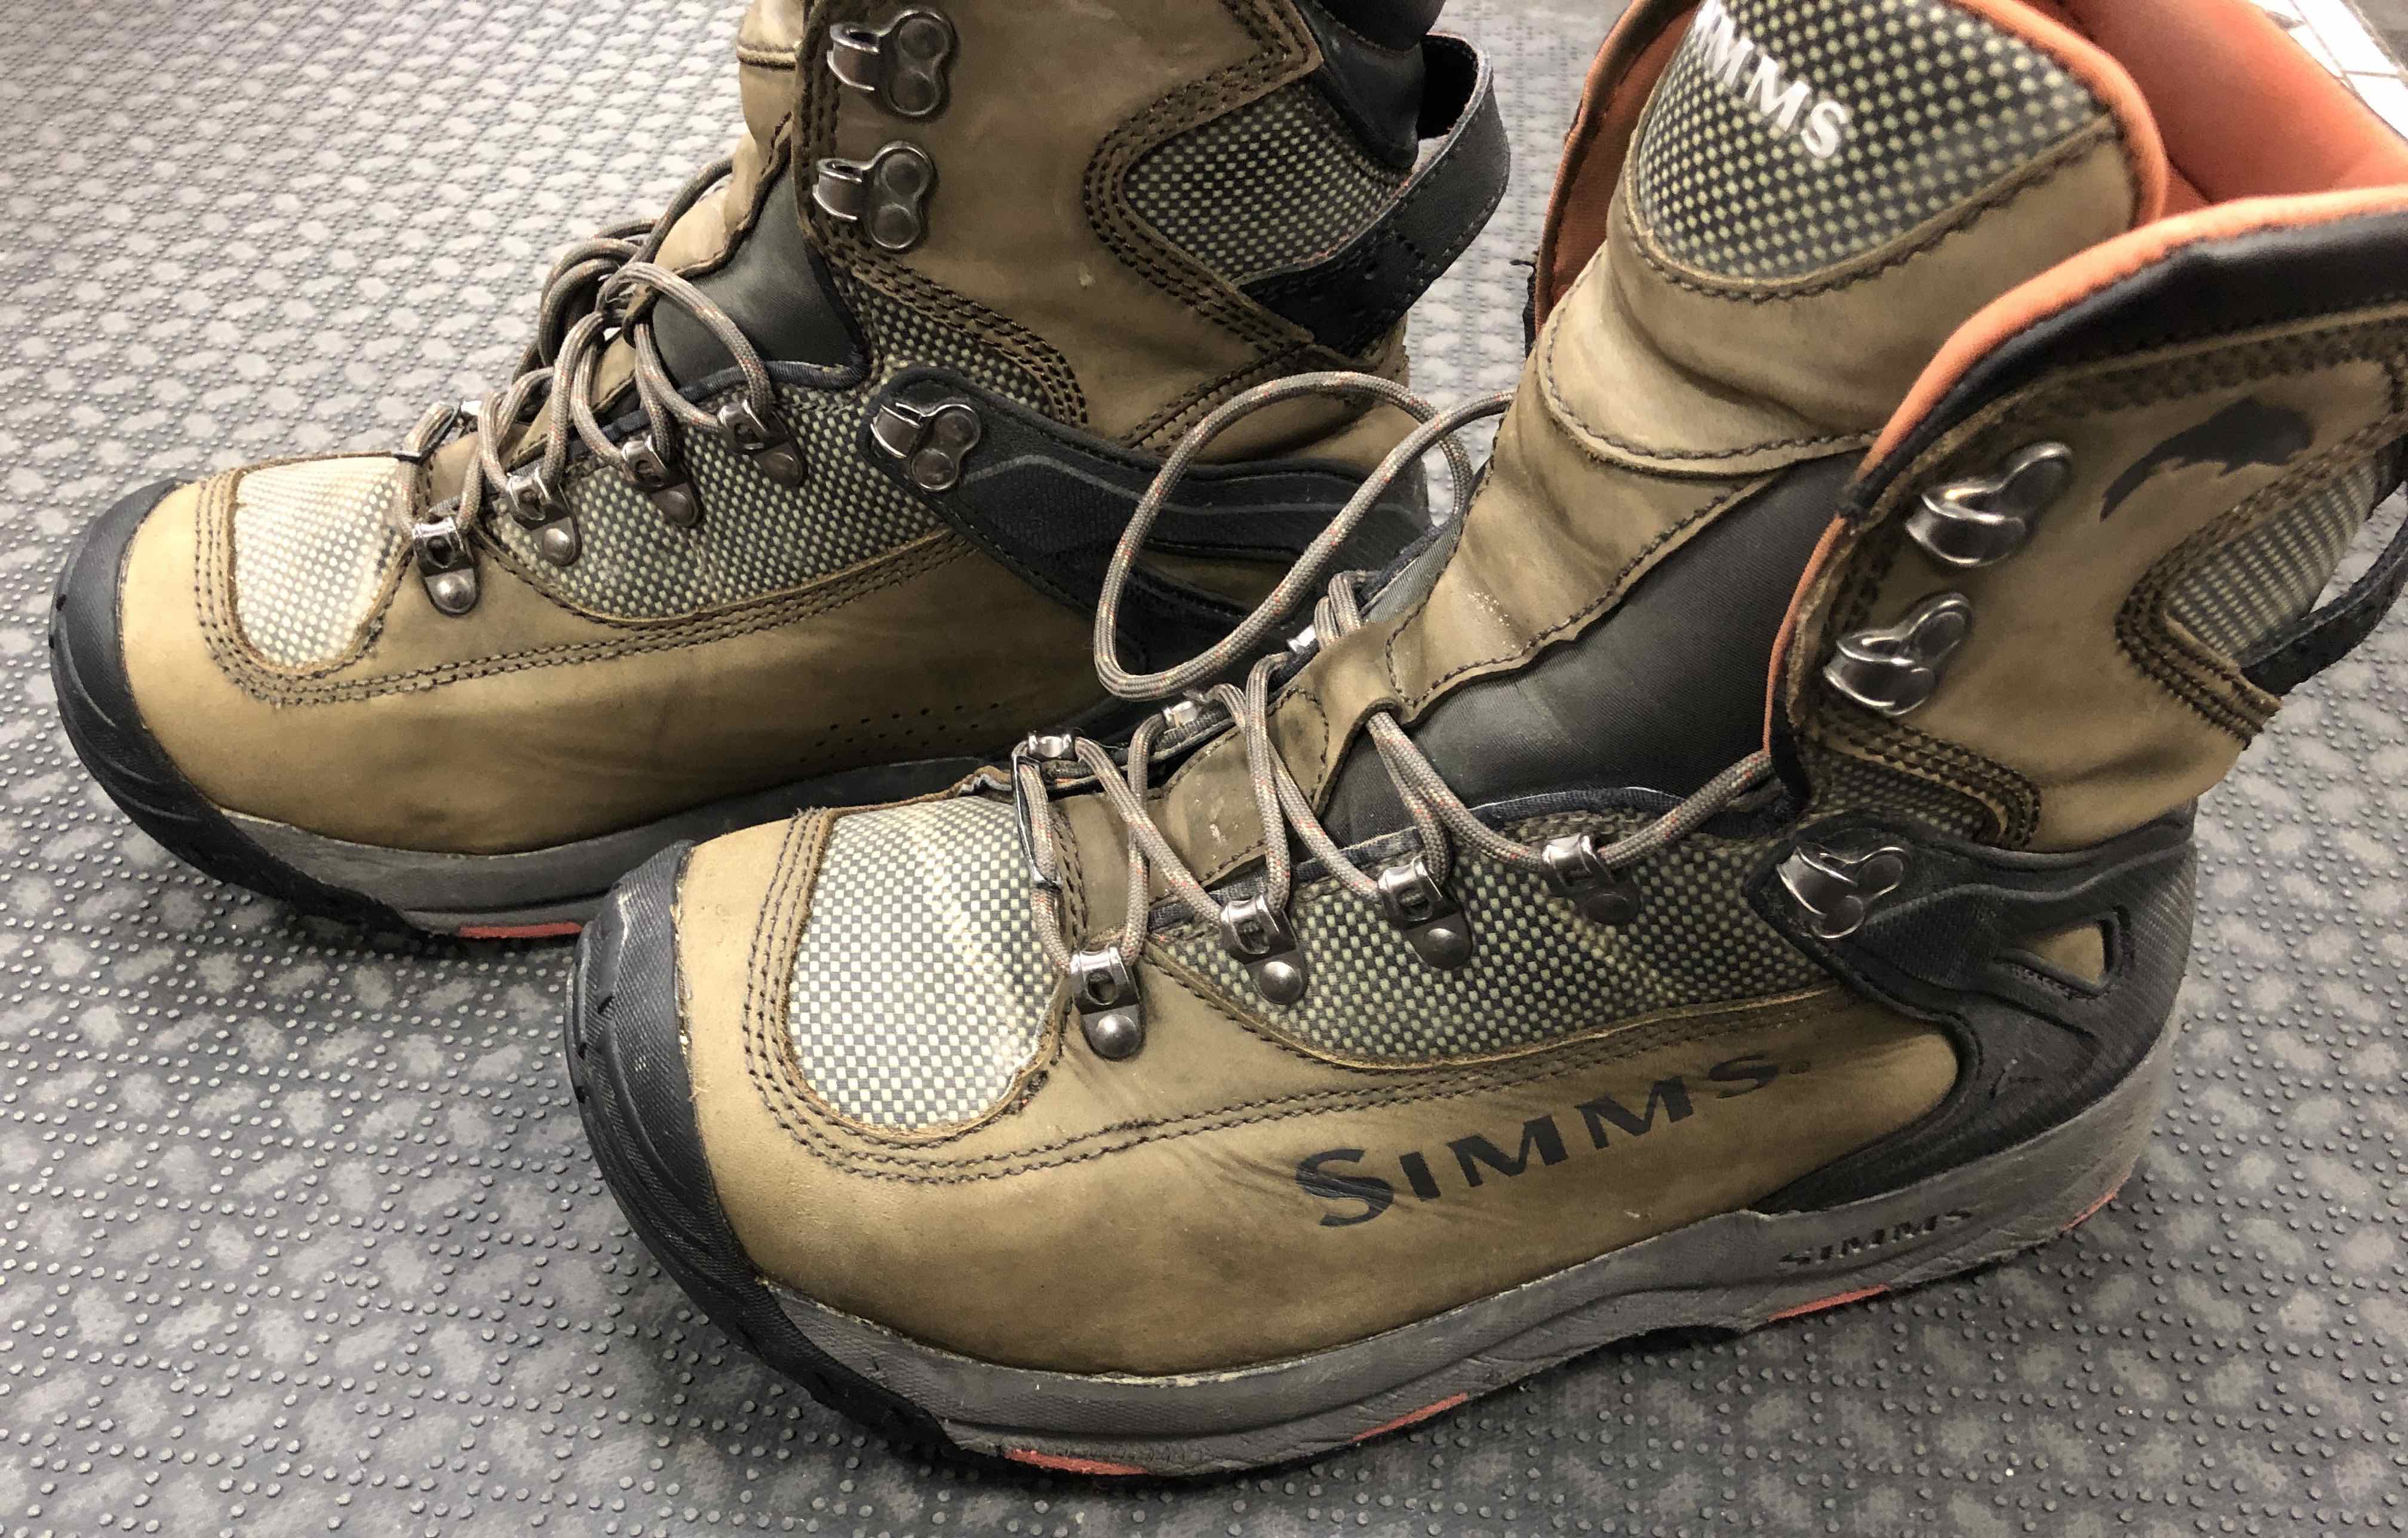 Simms G3 Guide Wading Vibram Boot - Size 11 - GOOD SHAPE! - $75